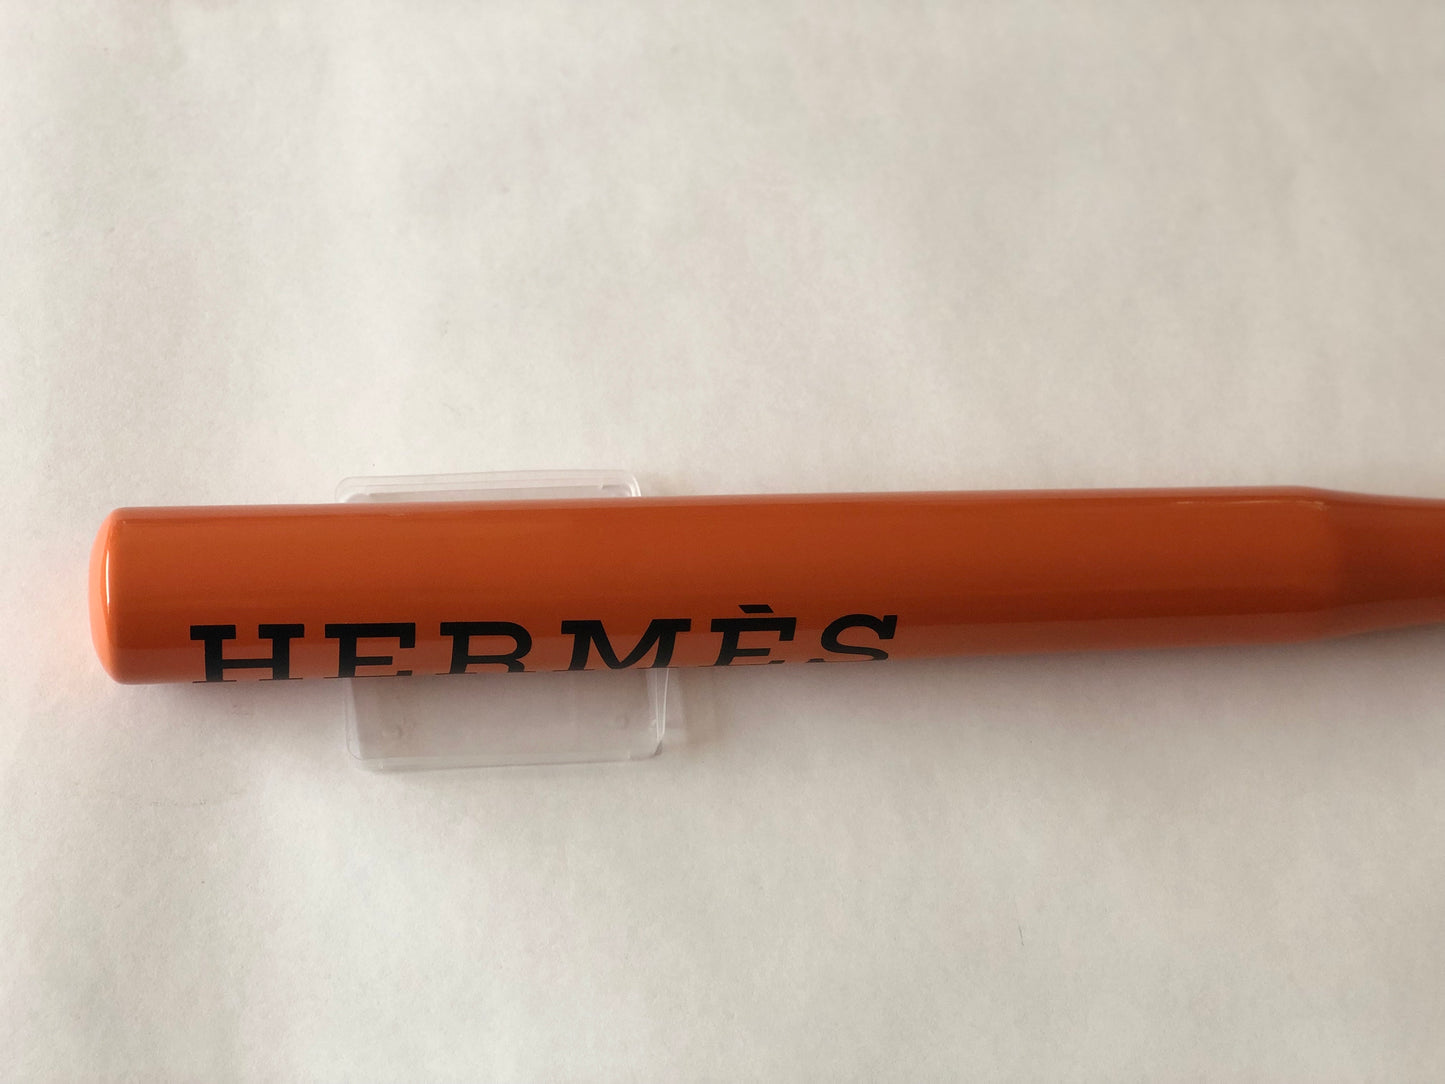 Rob VanMore - Beating Hermes with a Orange Bat